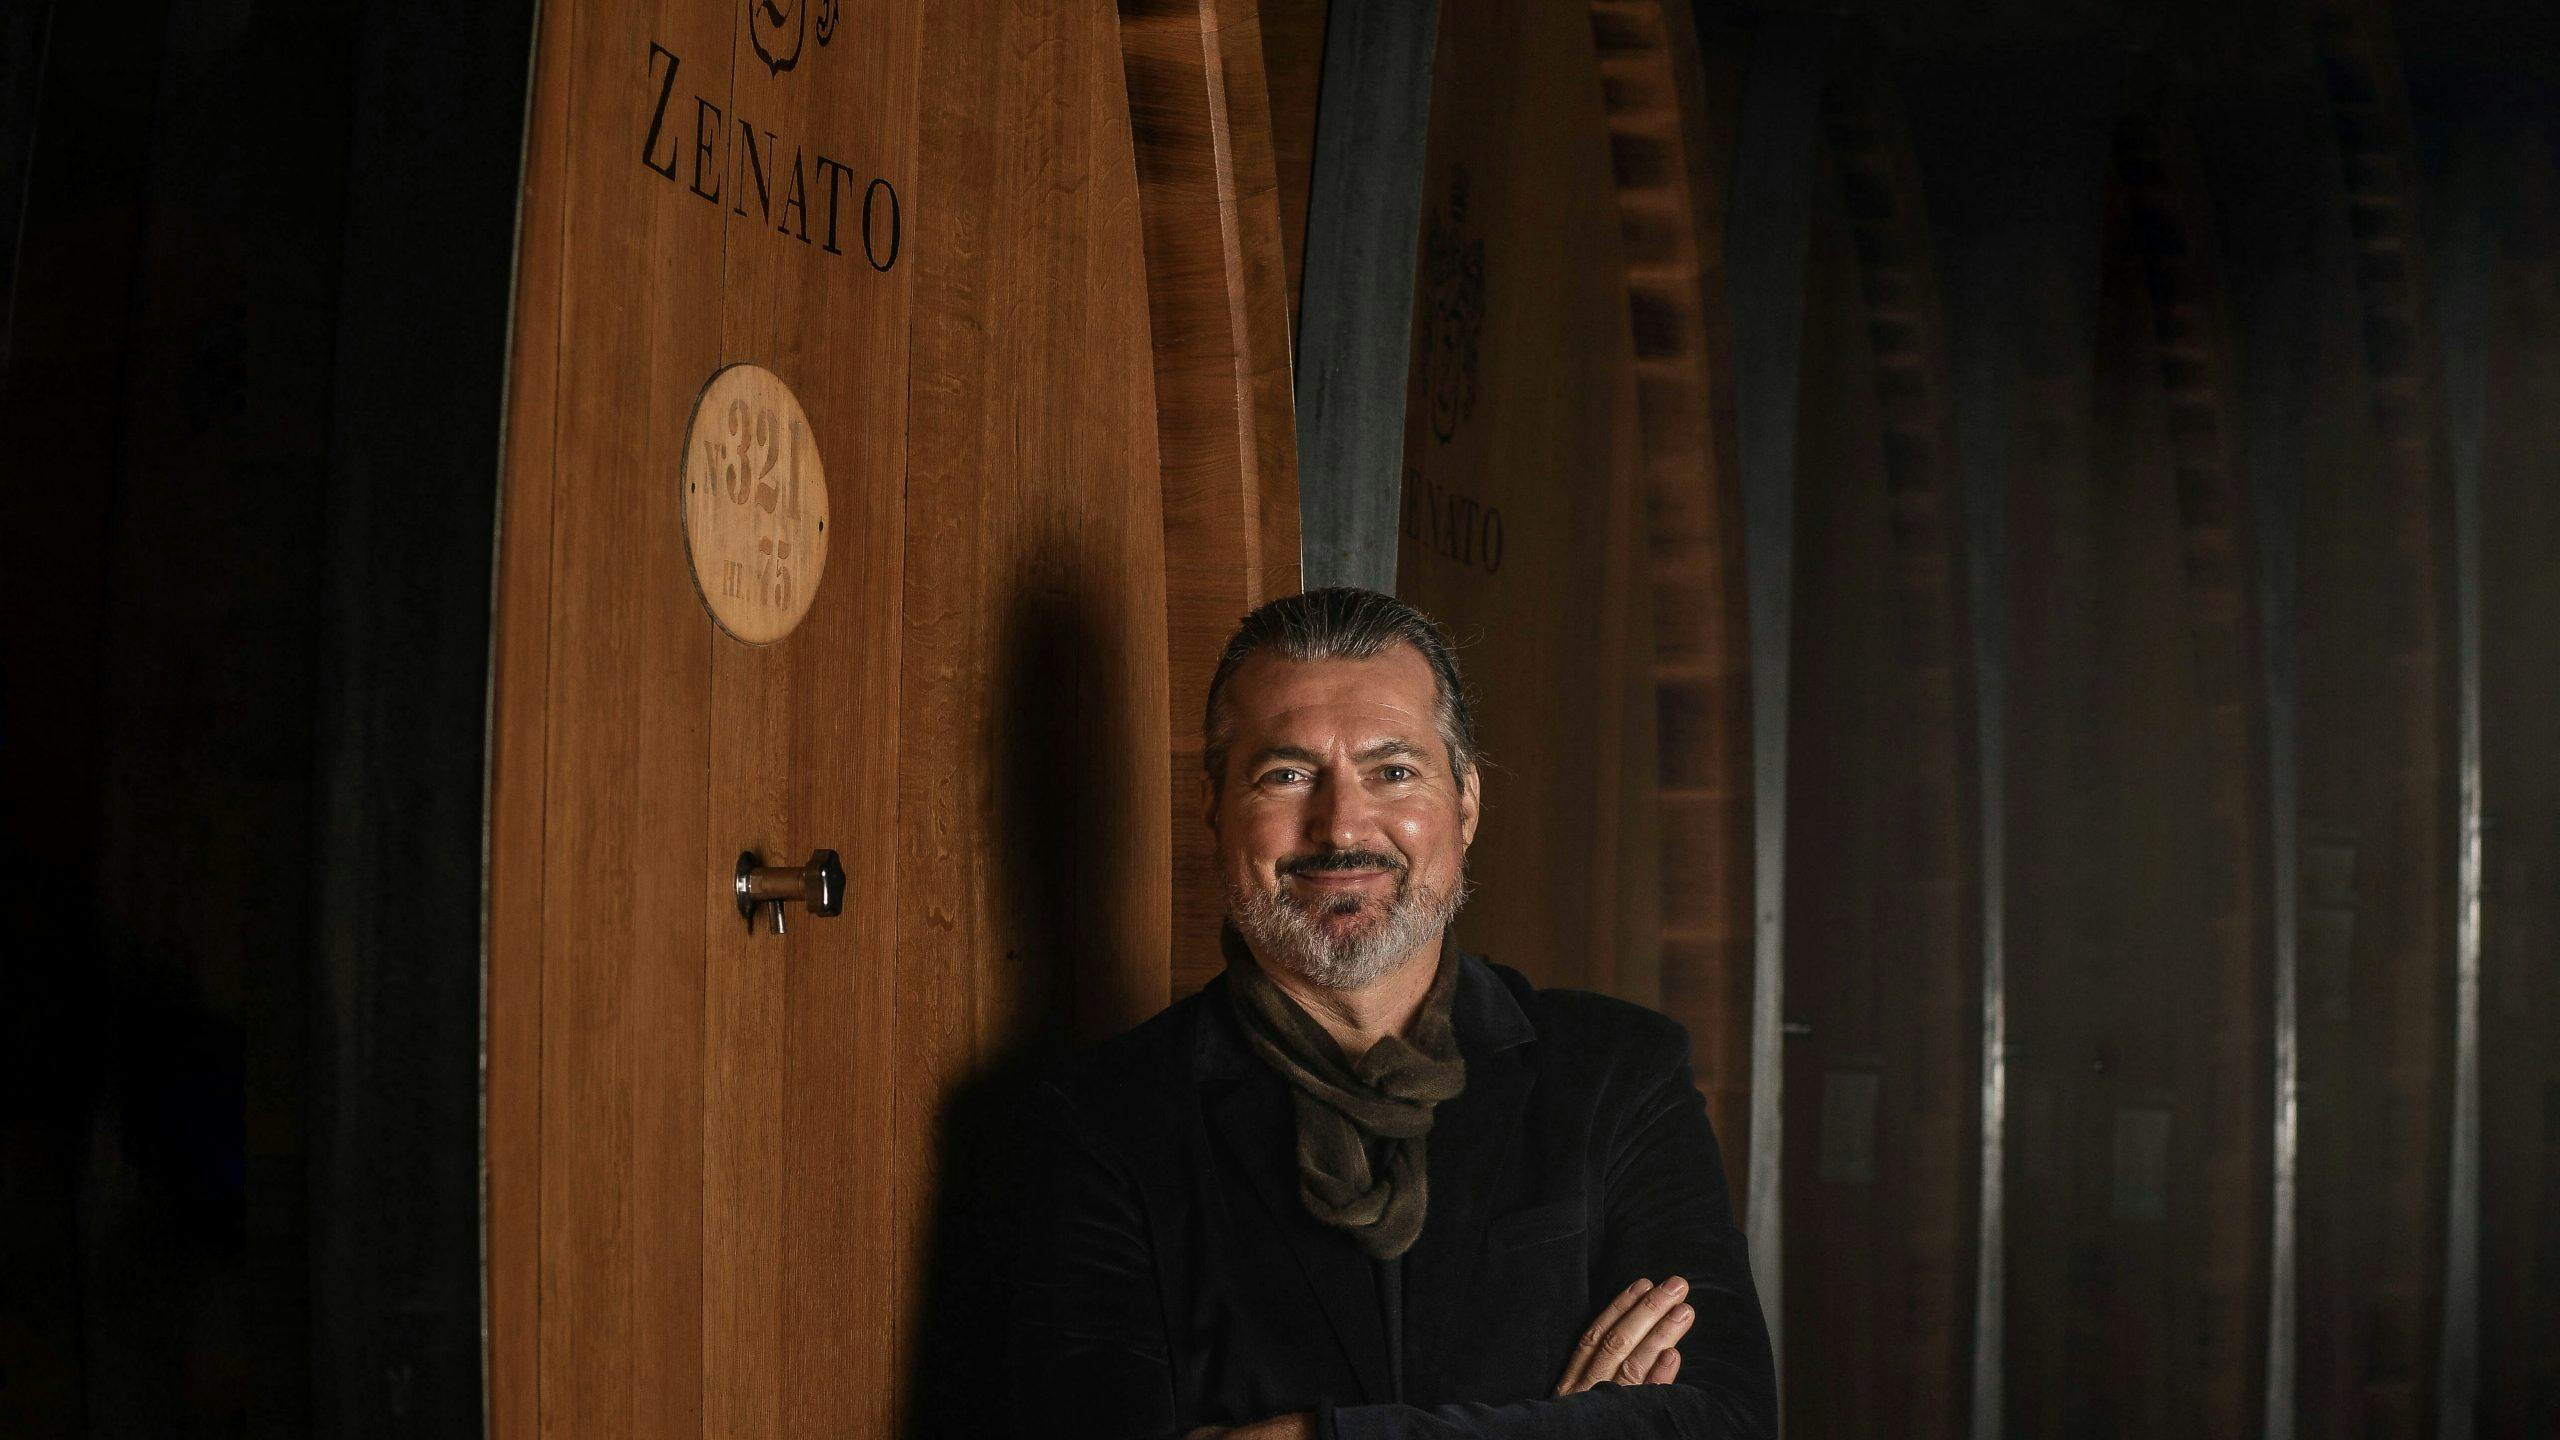 Alberto-Zenato-provinum-vinhandel